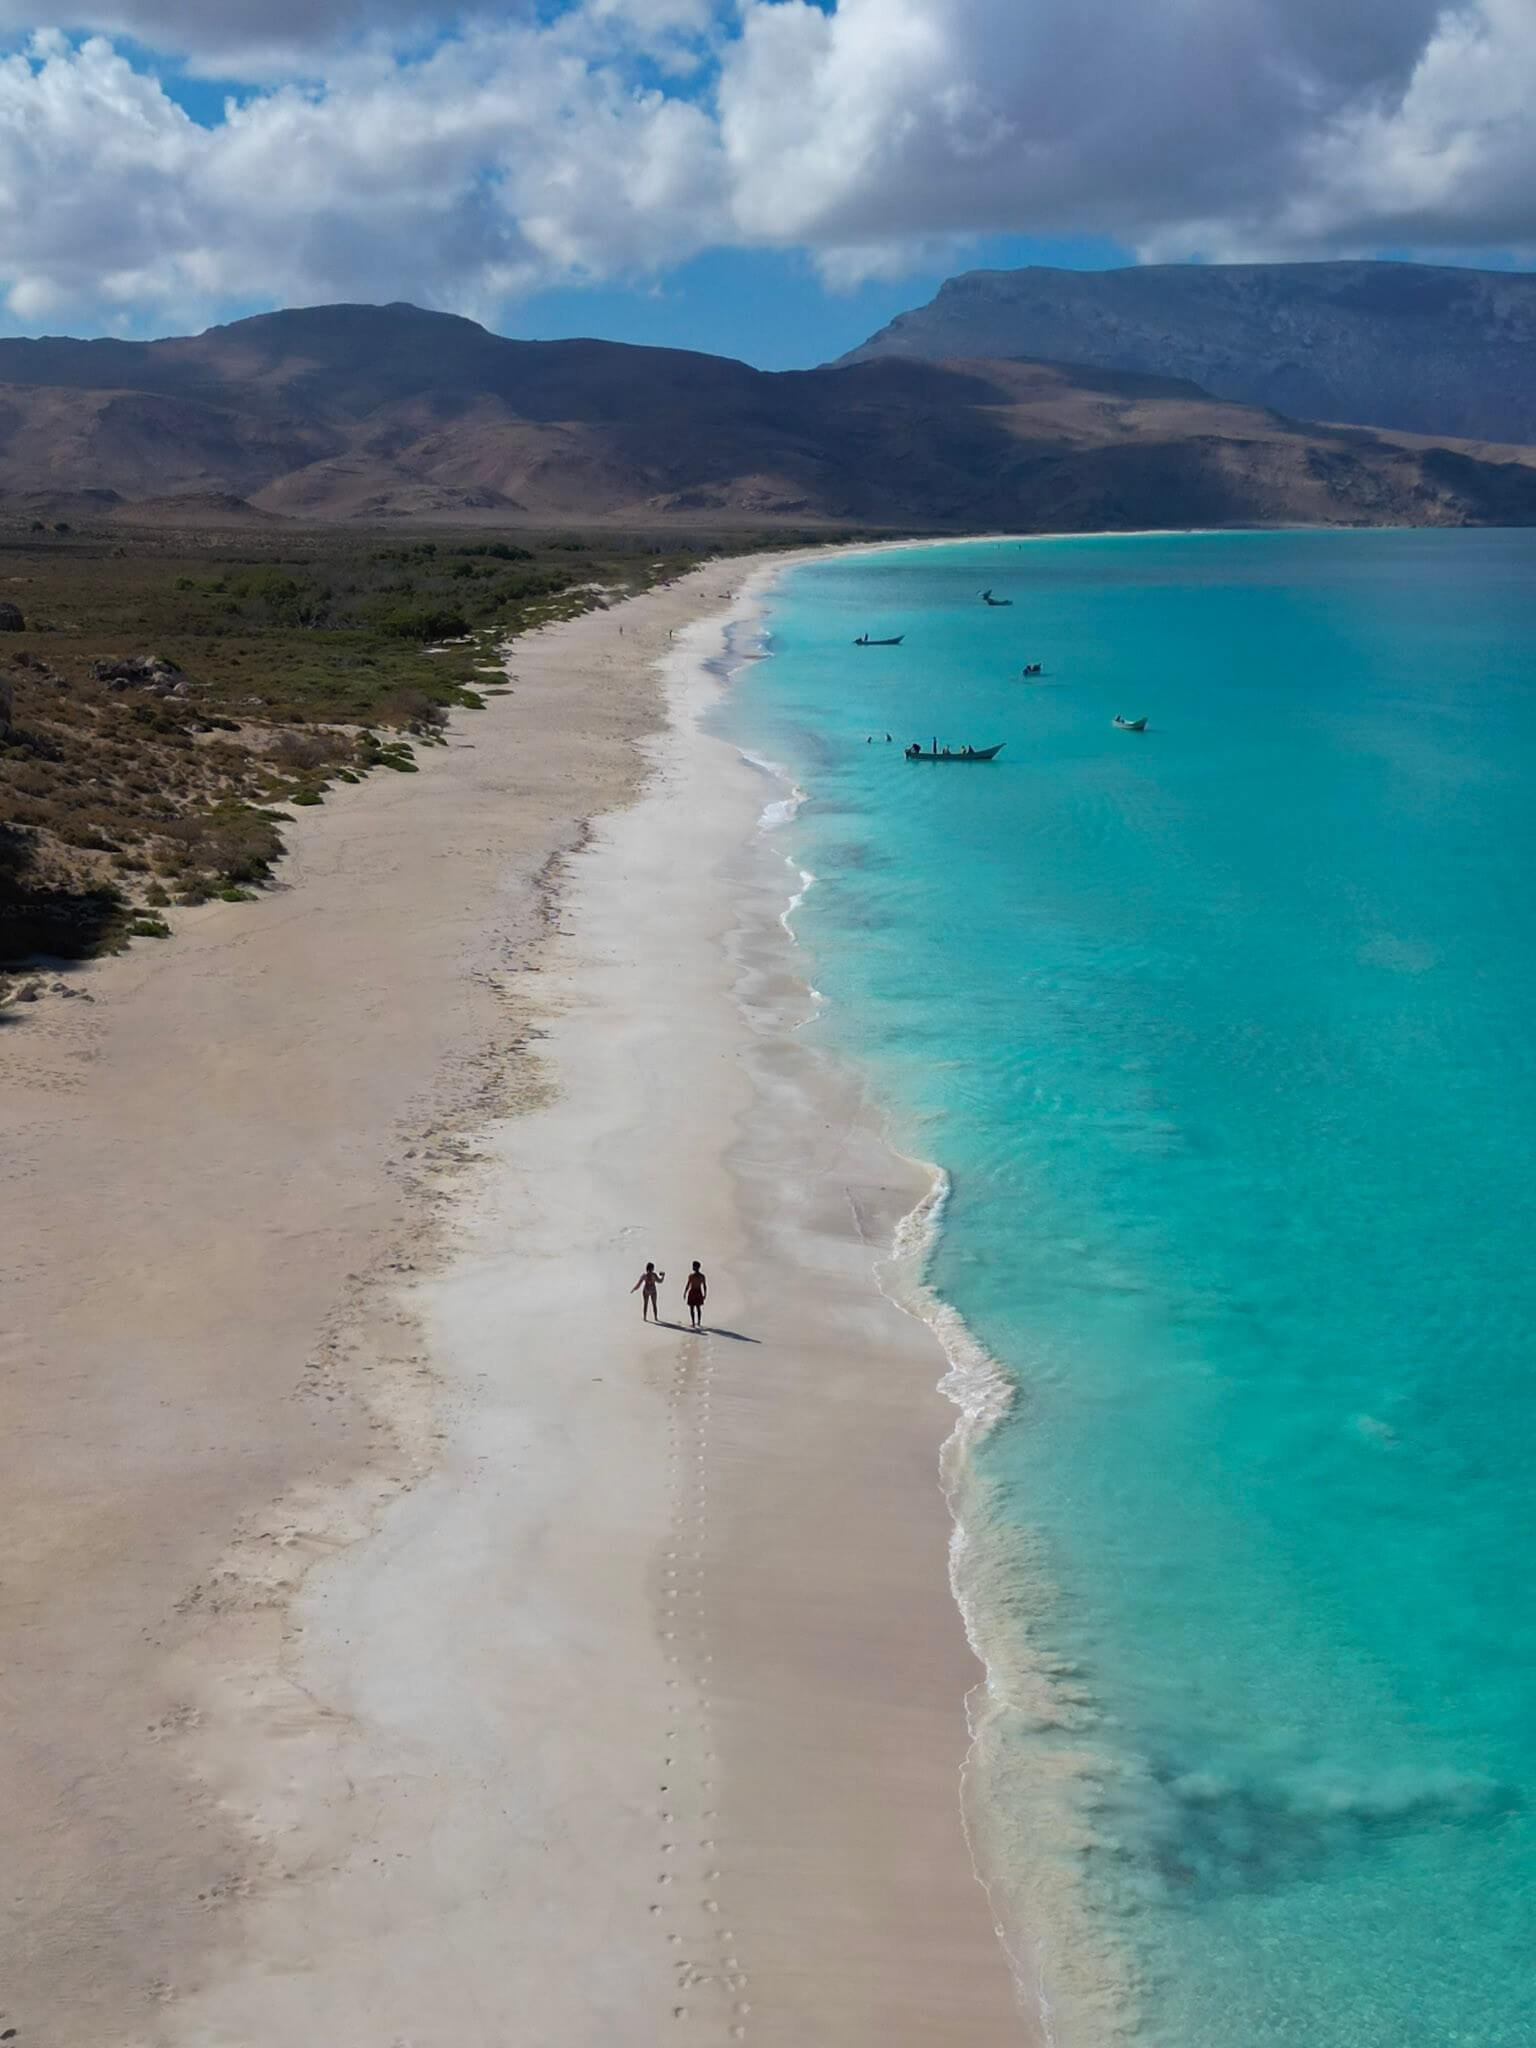 beaches on the island of Socotra, Yemen